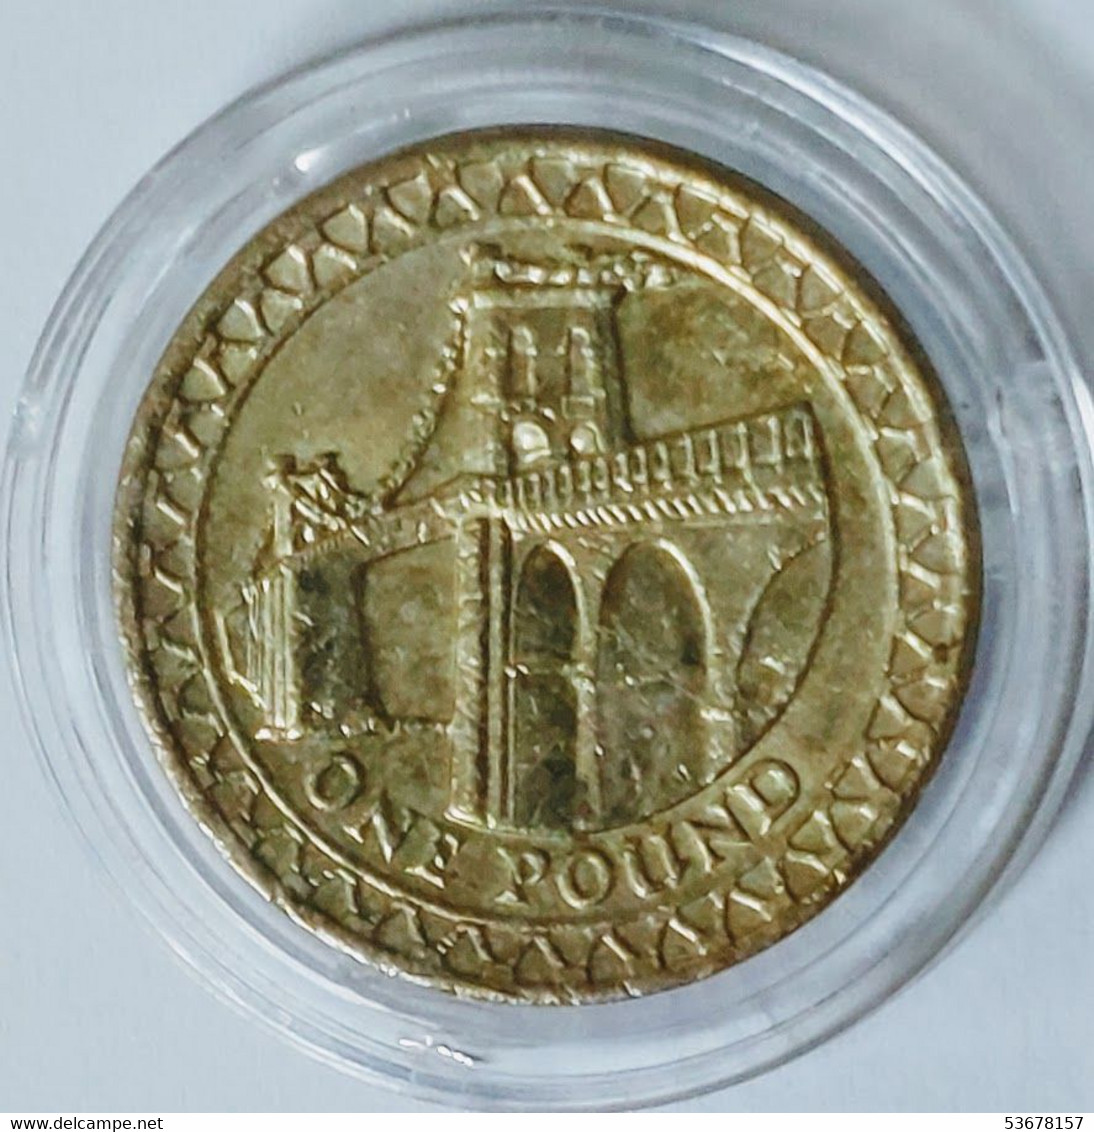 United Kingdom - 1 Pound, 2005, Menai Suspension Bridge, KM# 1051 - 1 Pond